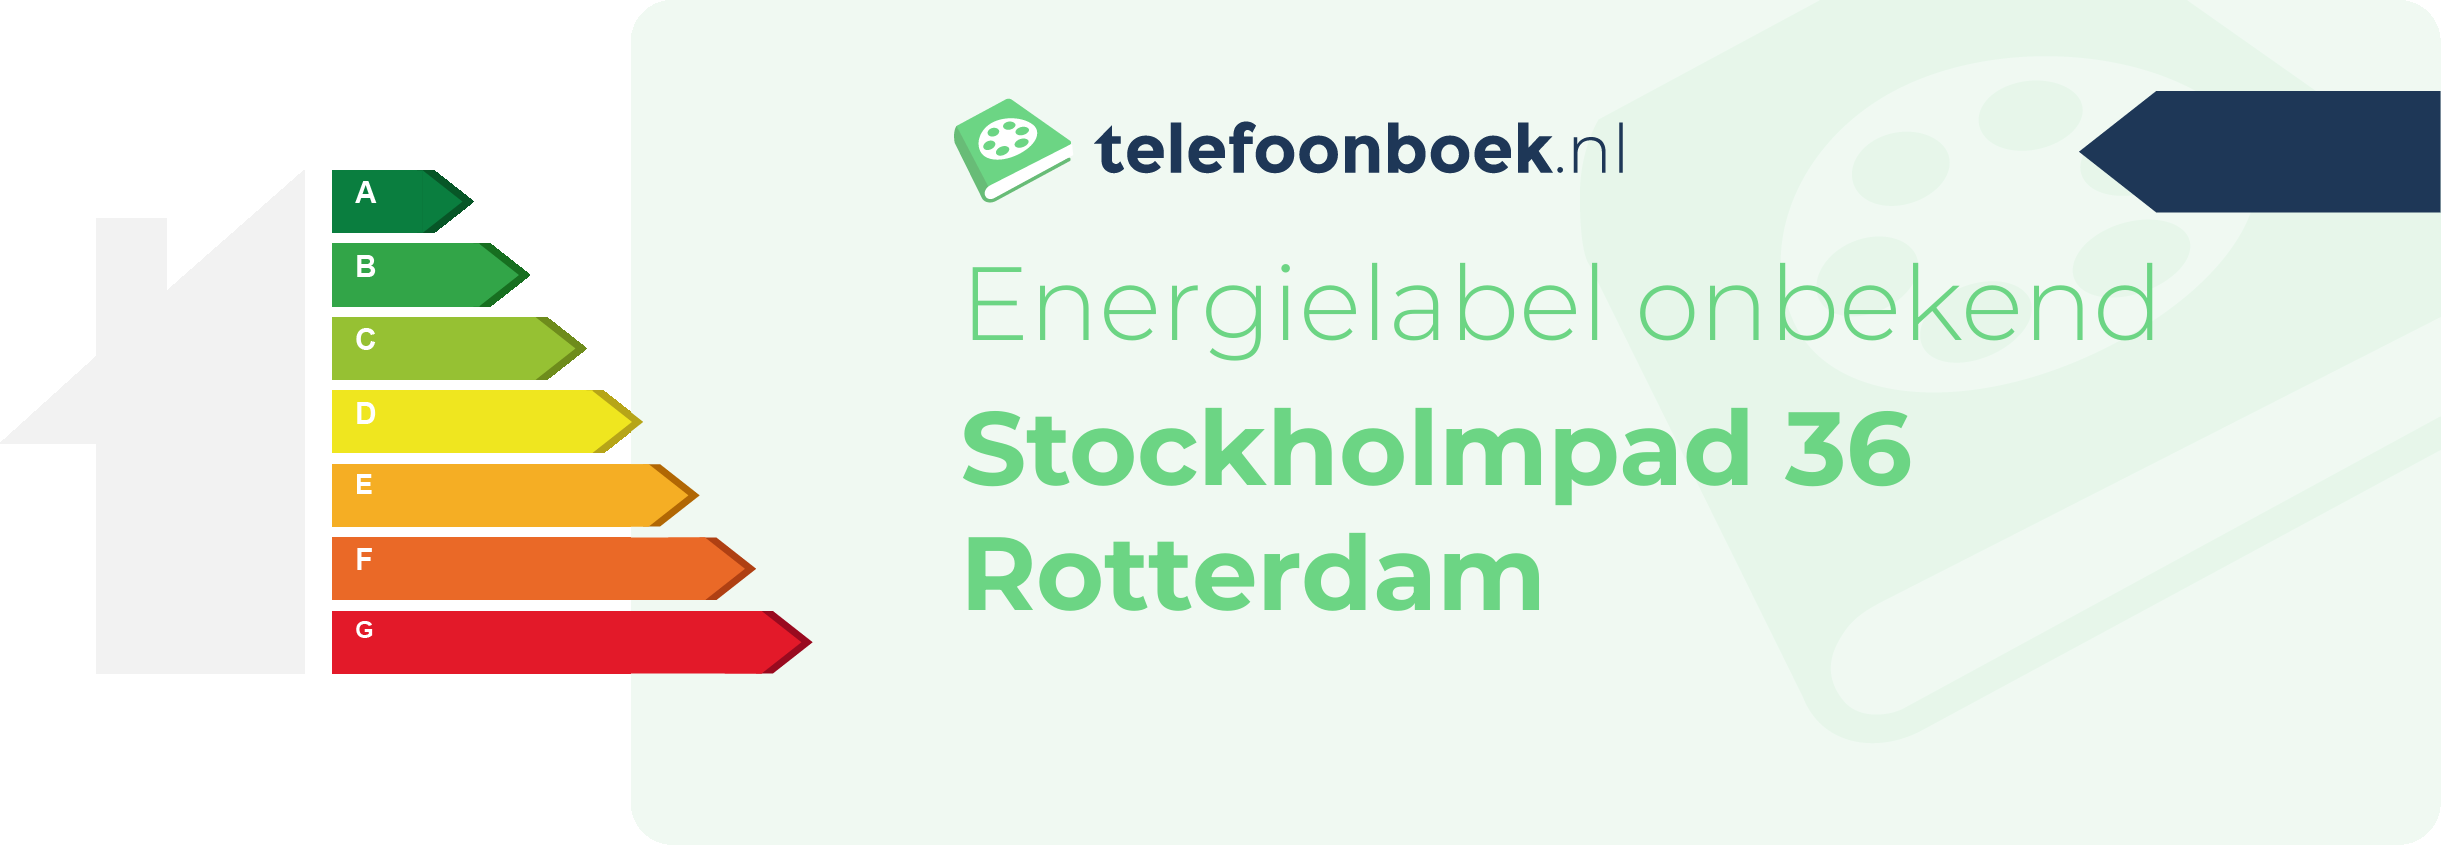 Energielabel Stockholmpad 36 Rotterdam